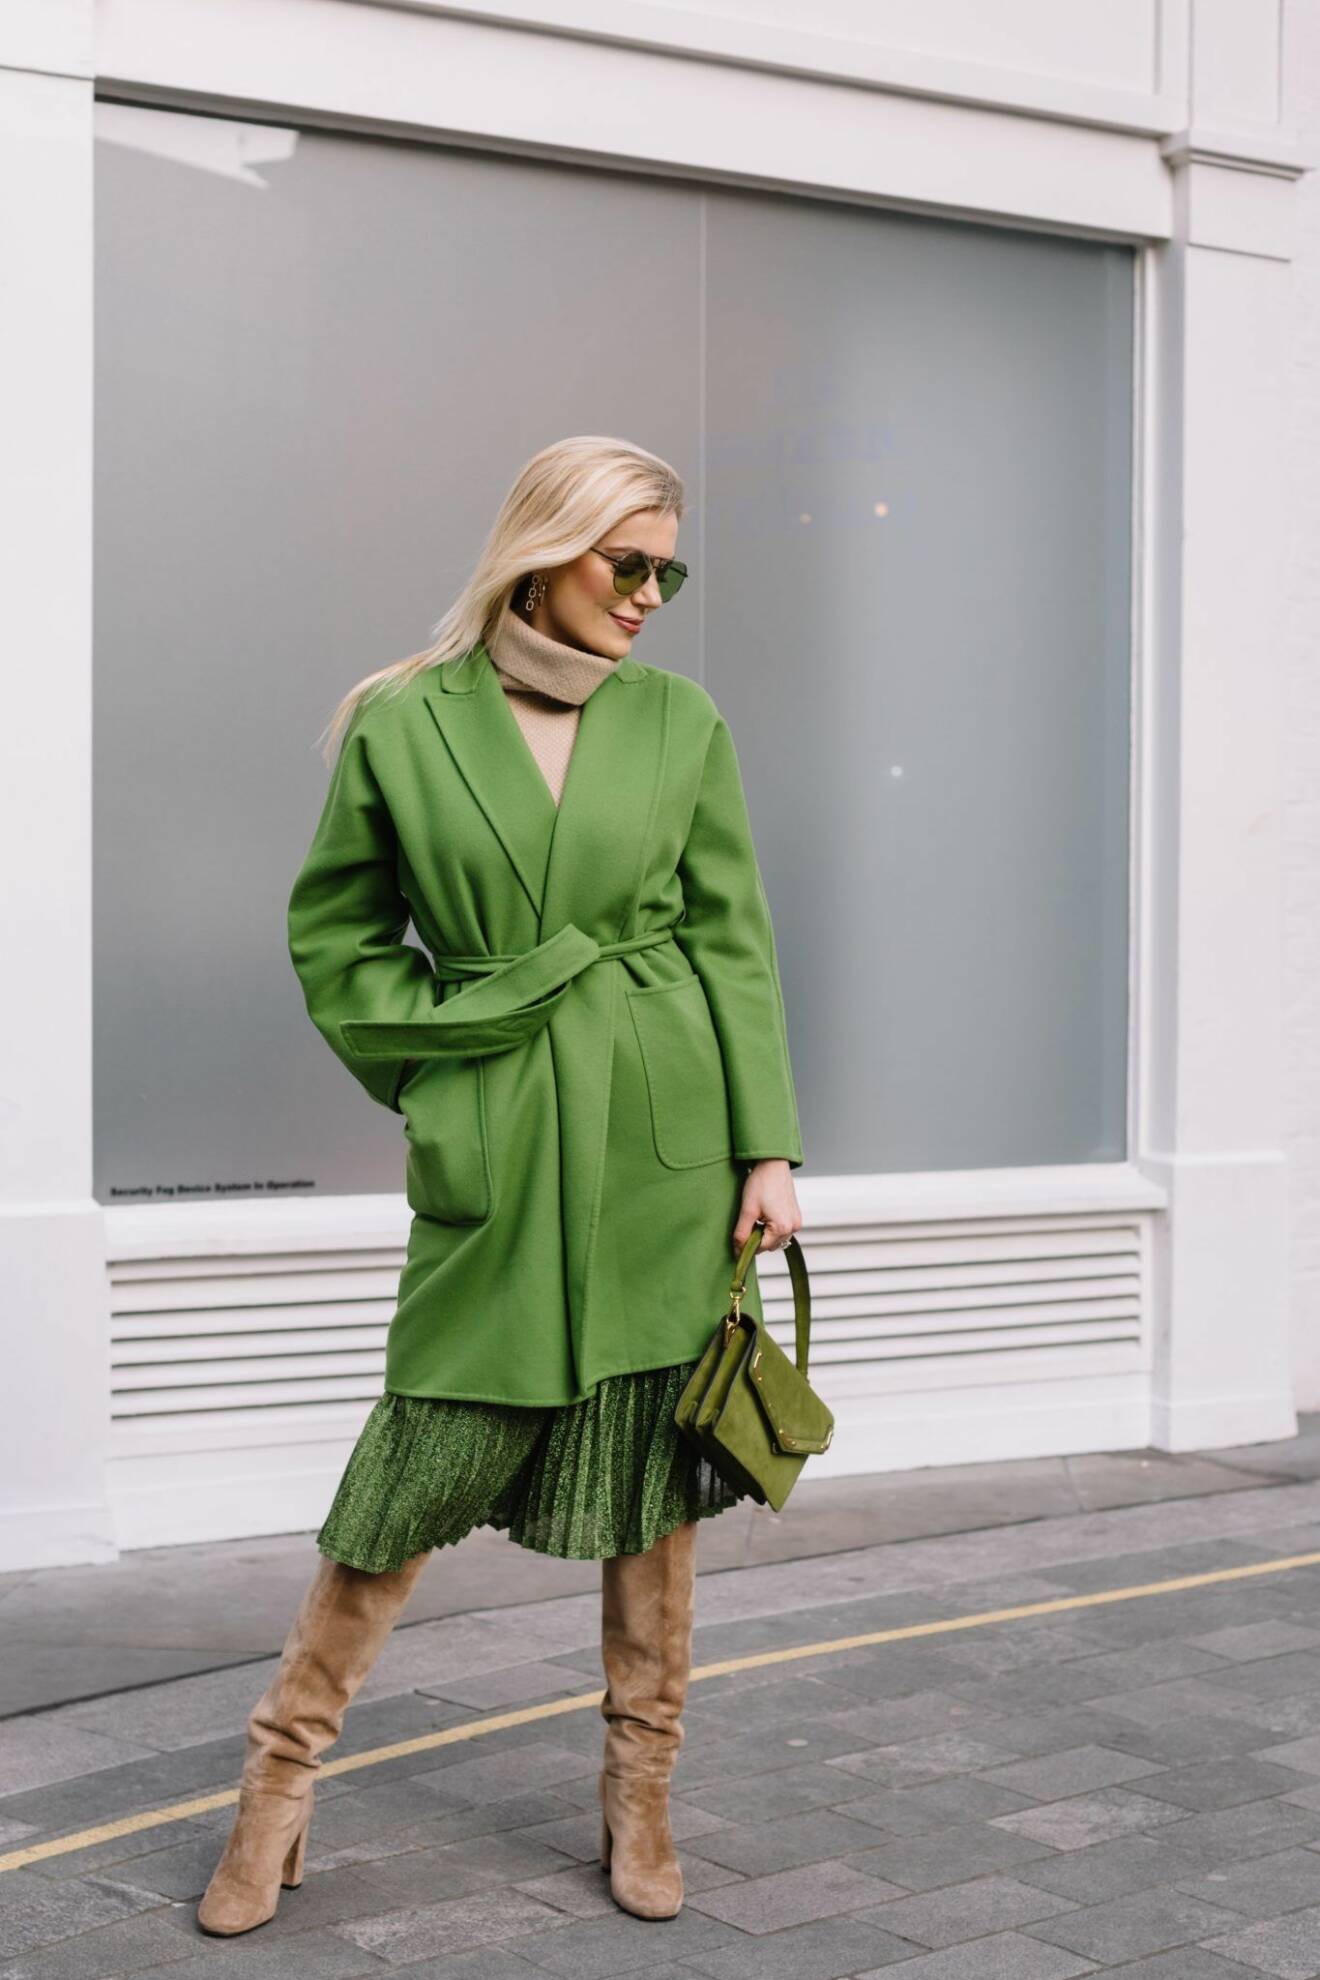 Streetstyle från London Fashion week, grön look.